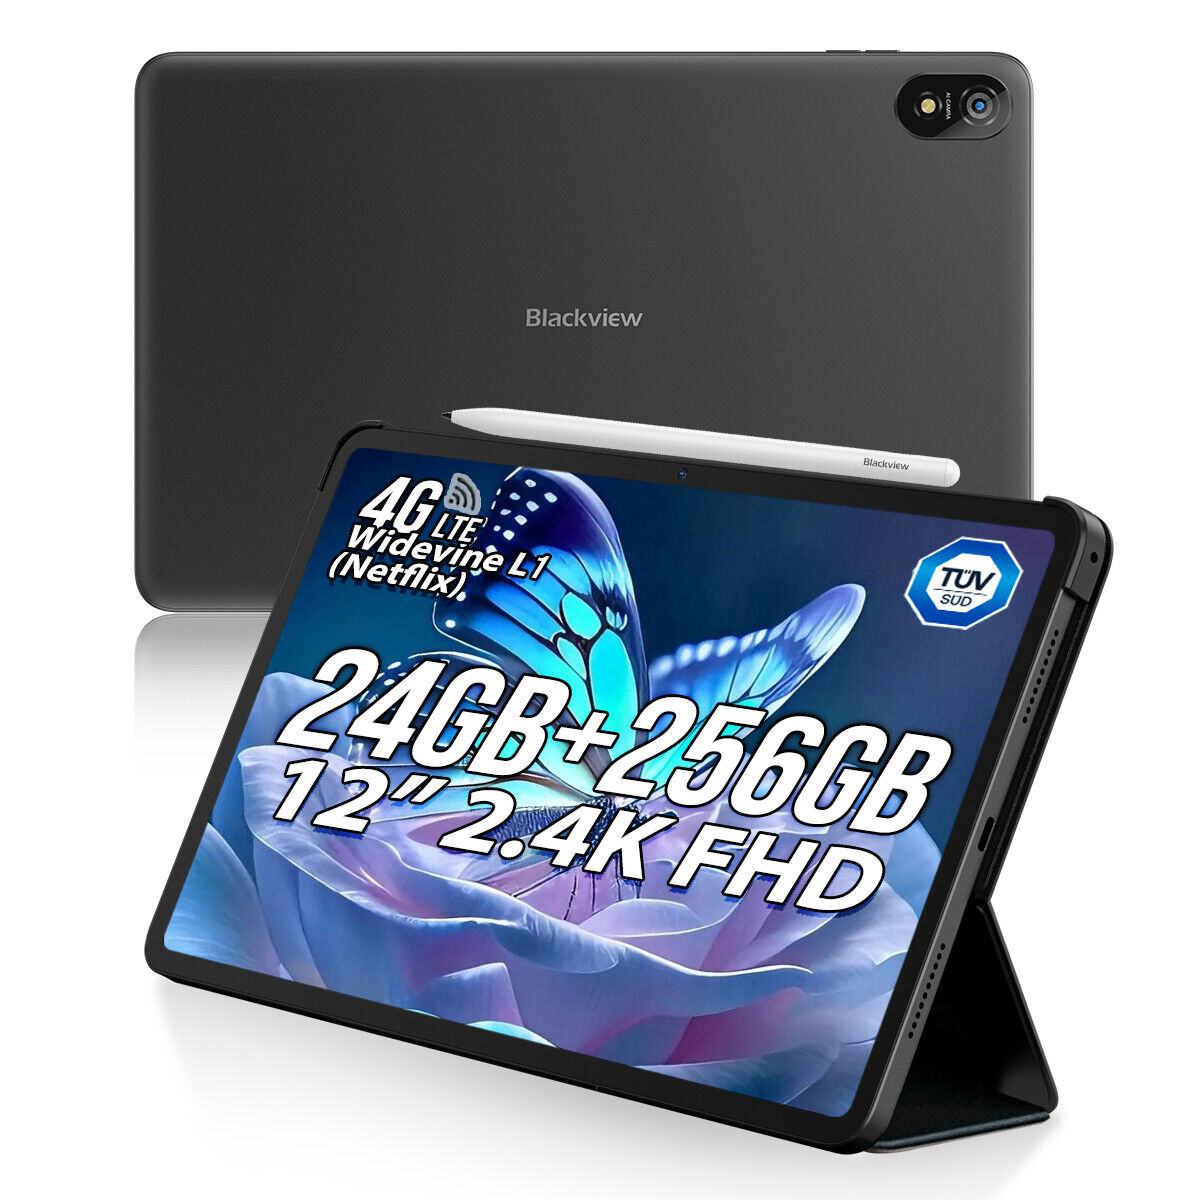 Blackview 12 inch Tablet Android 13 Tab18 24GB+256GB 8800mAh Widevine L1-Netflix